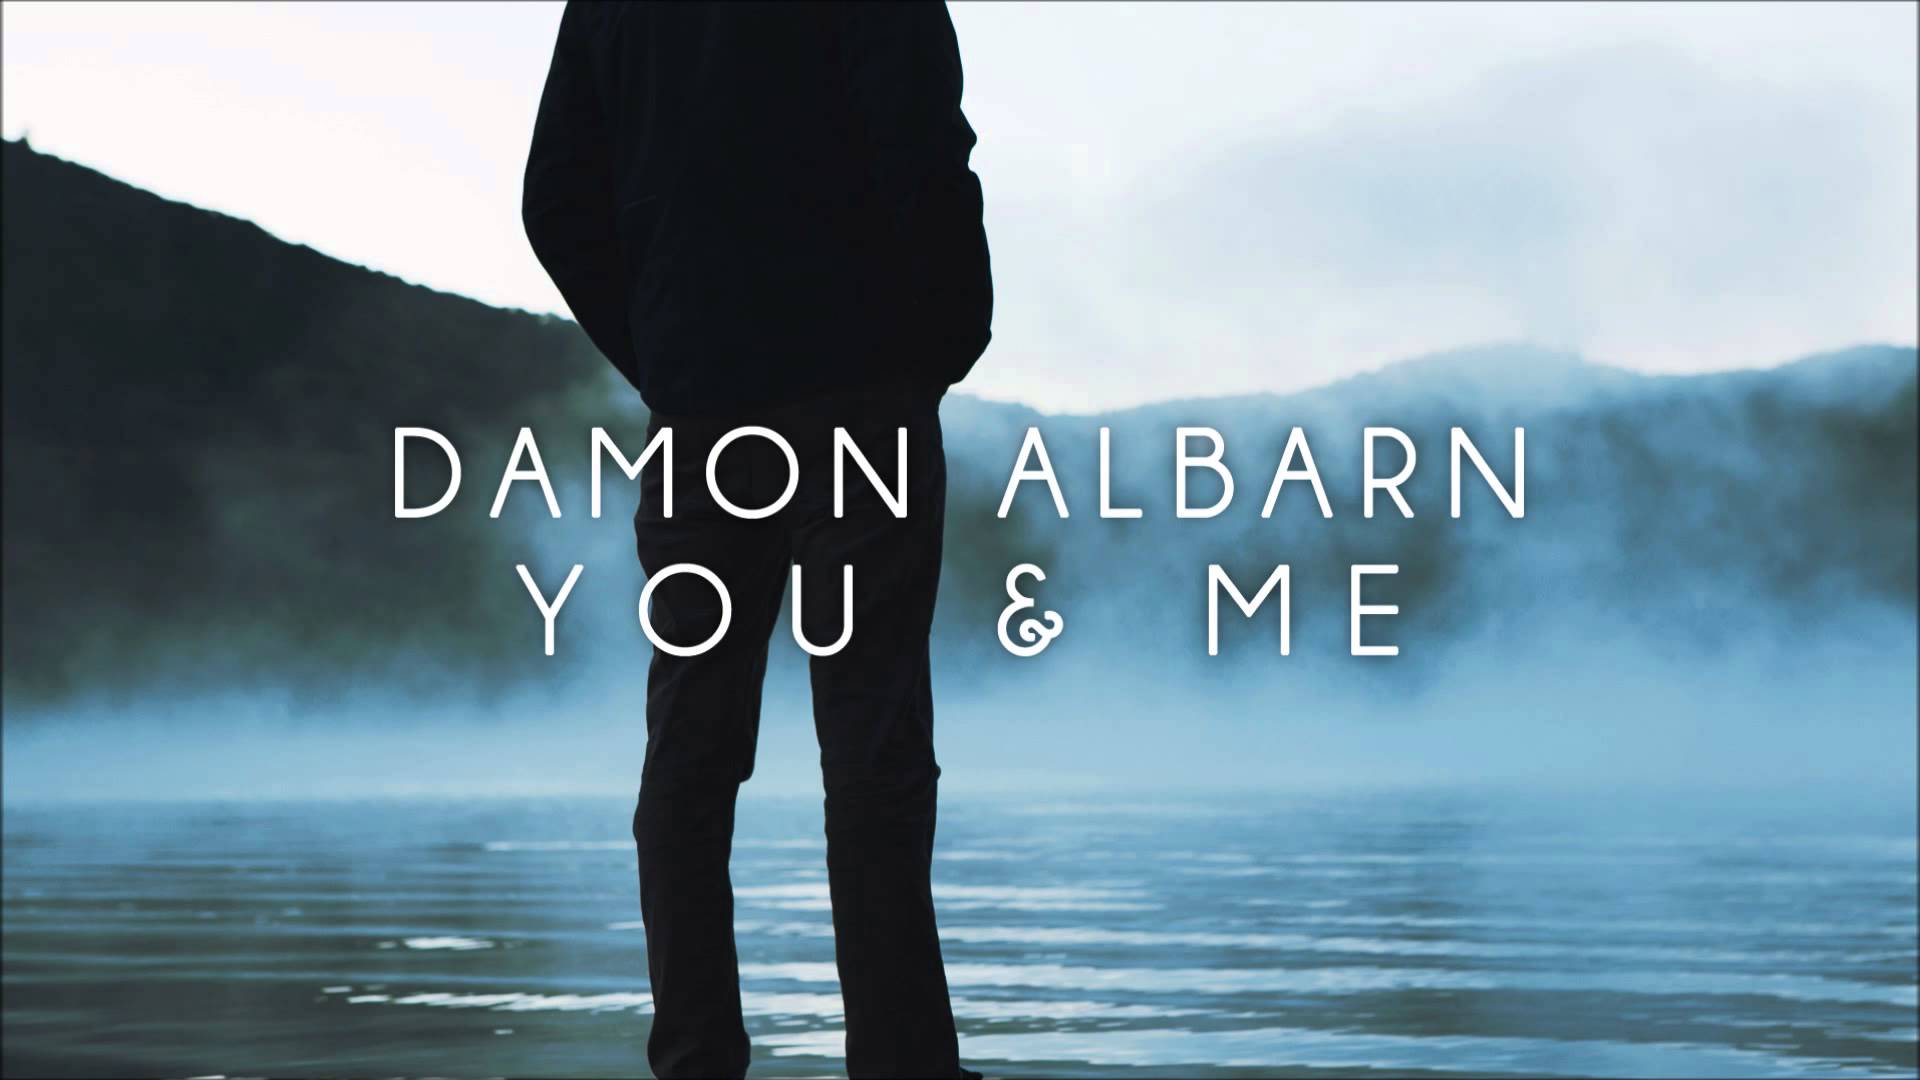 Damon Albarn & Me